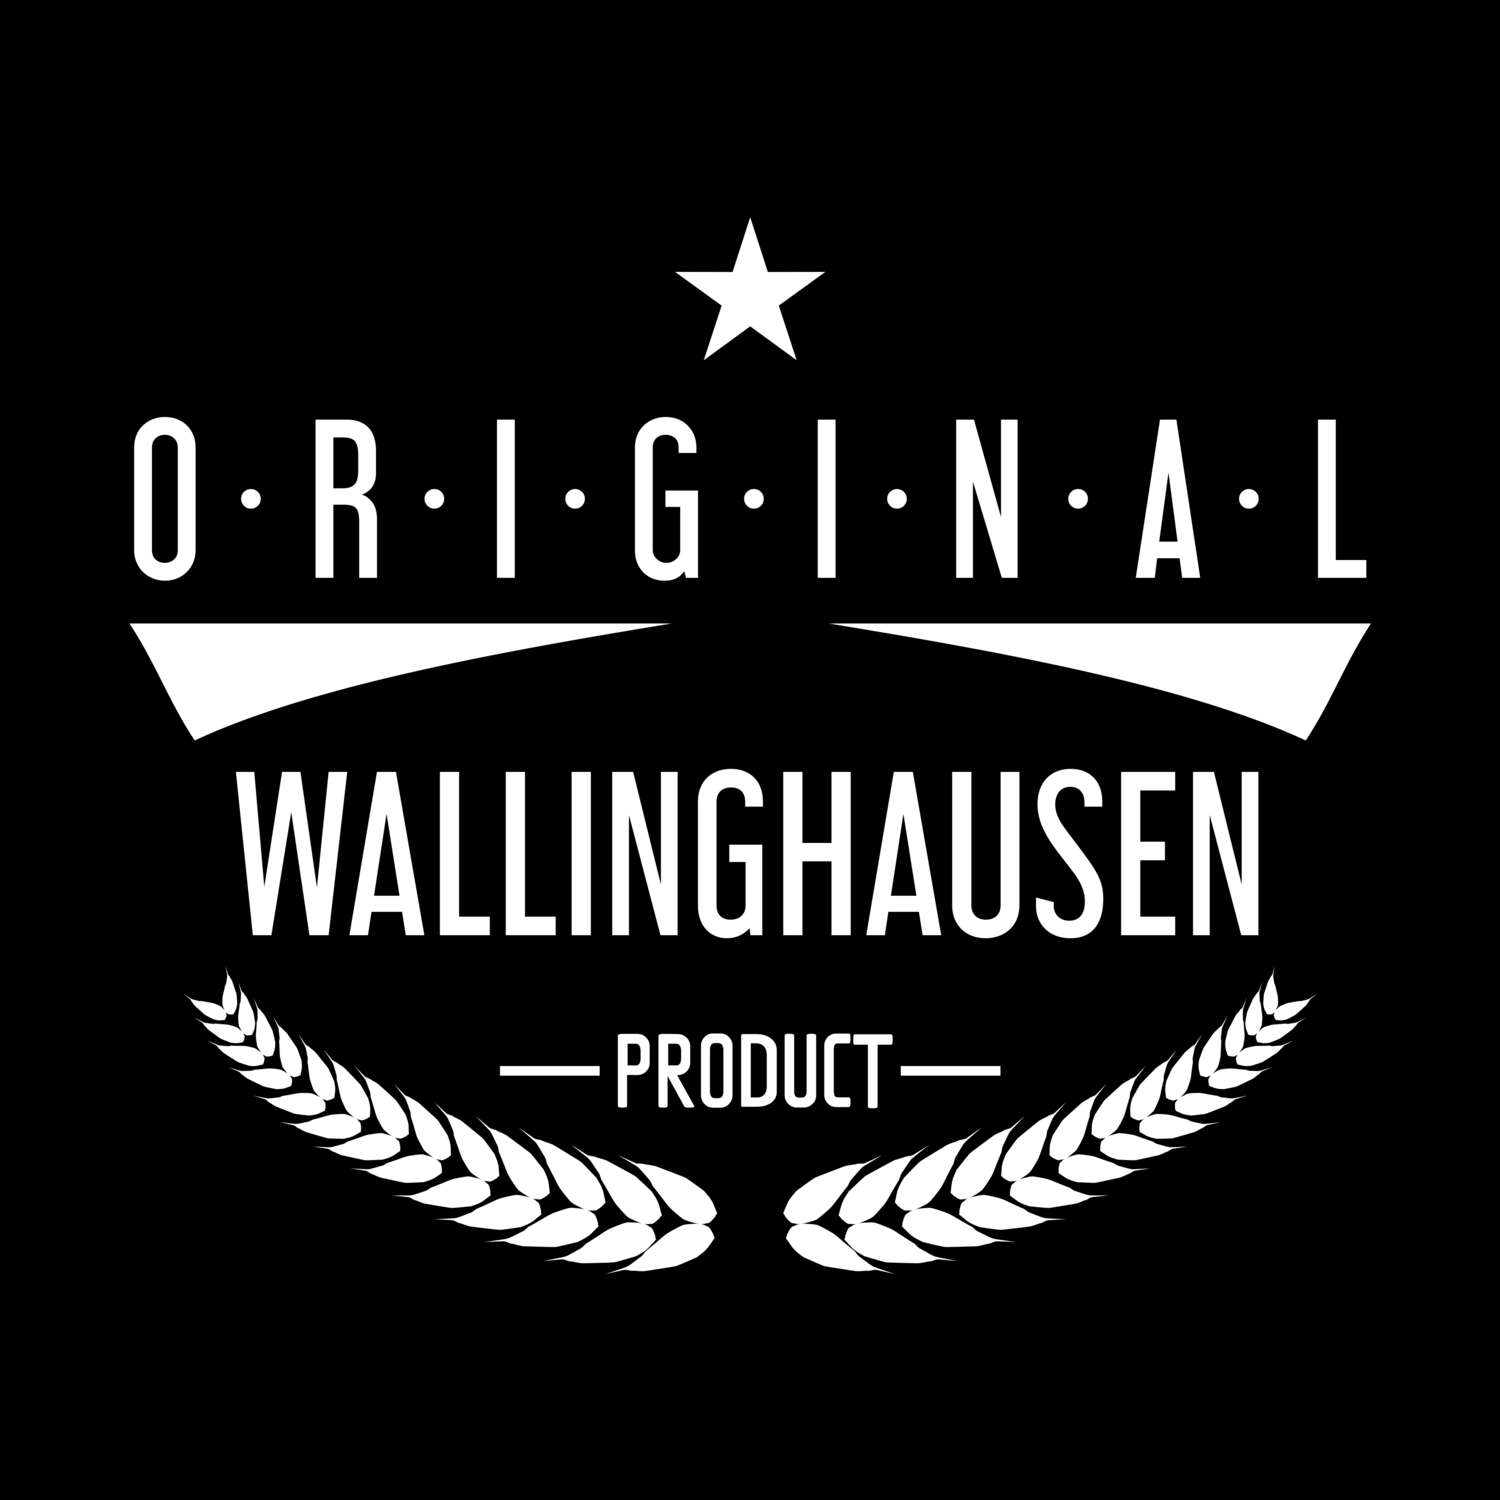 Wallinghausen T-Shirt »Original Product«